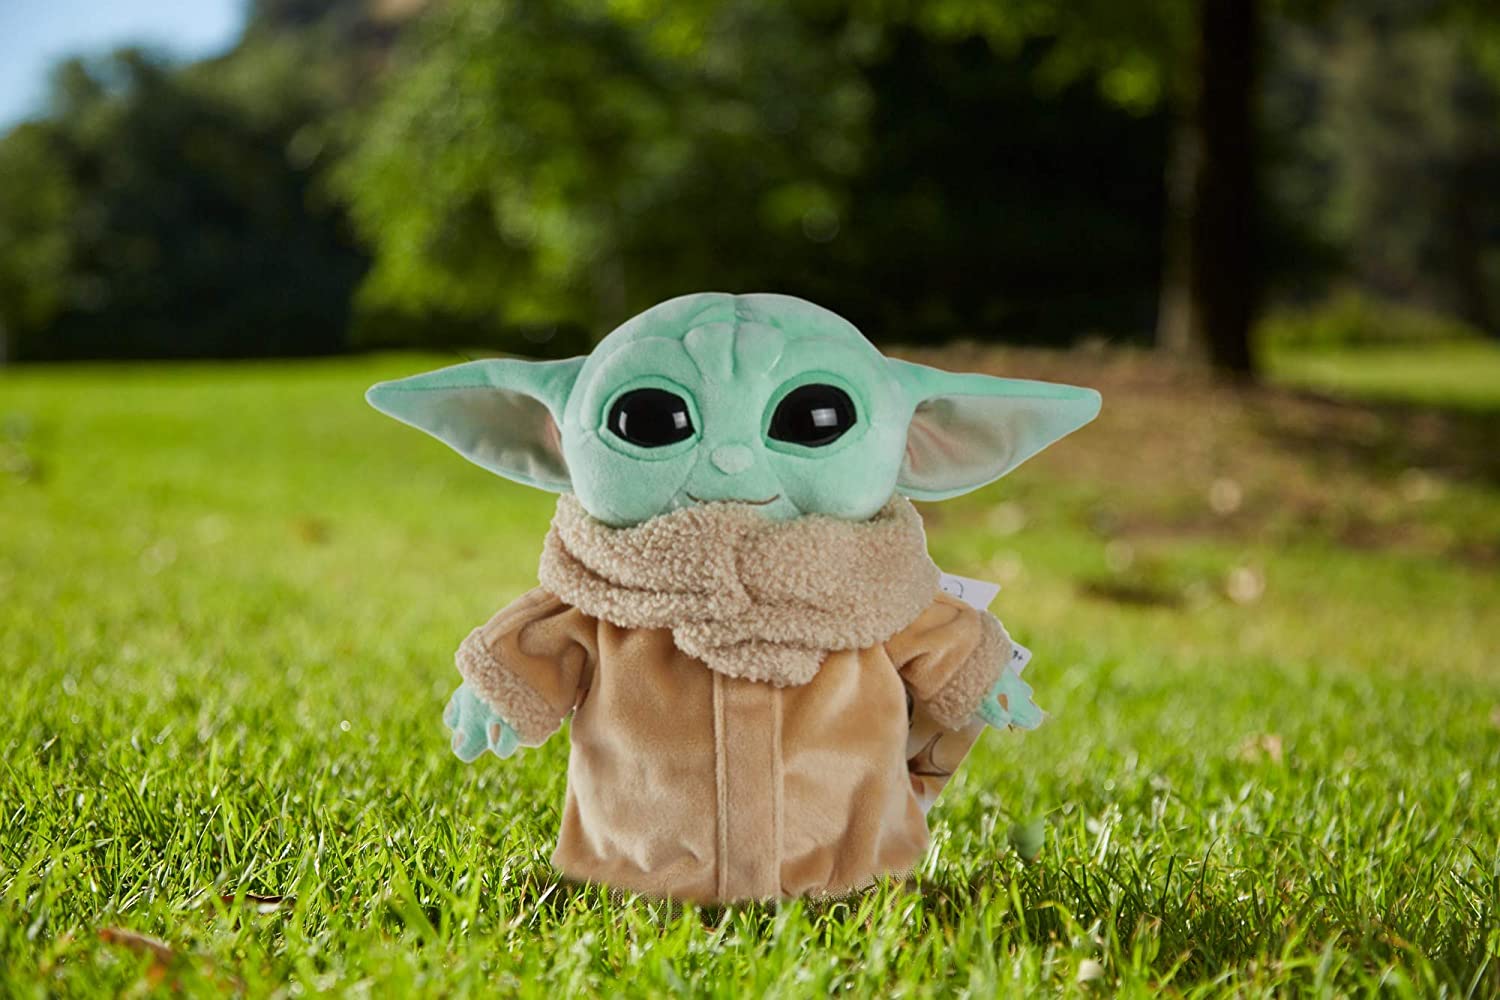 Star Wars The Mandalorian Grogu 8 Inch Plush Toy - Small Yoda Baby Figure